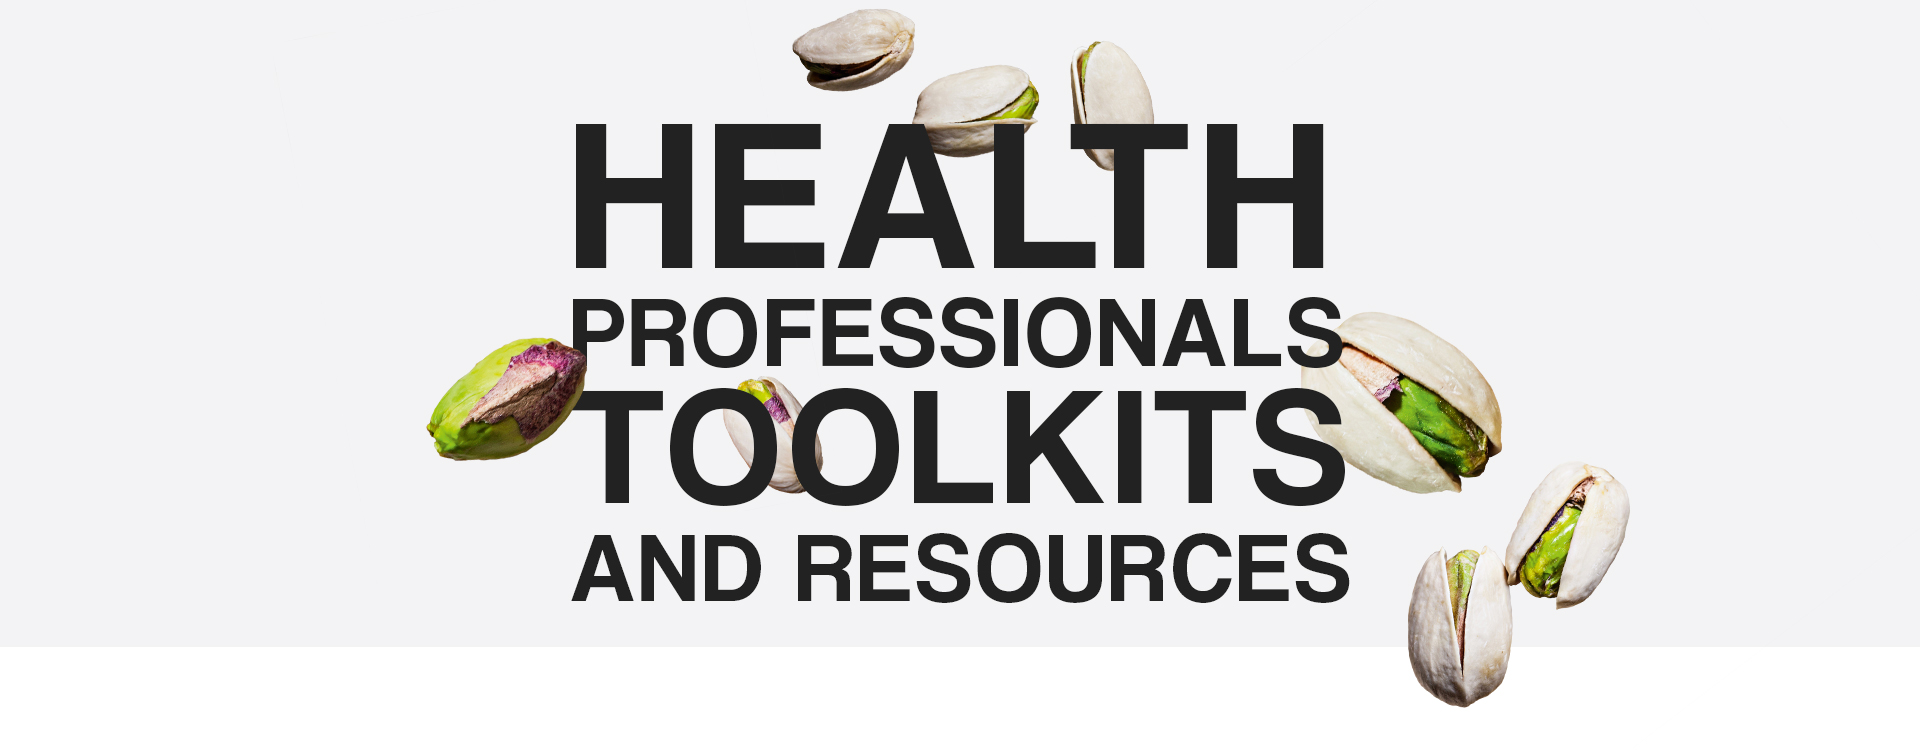 Health Professional Toolkit